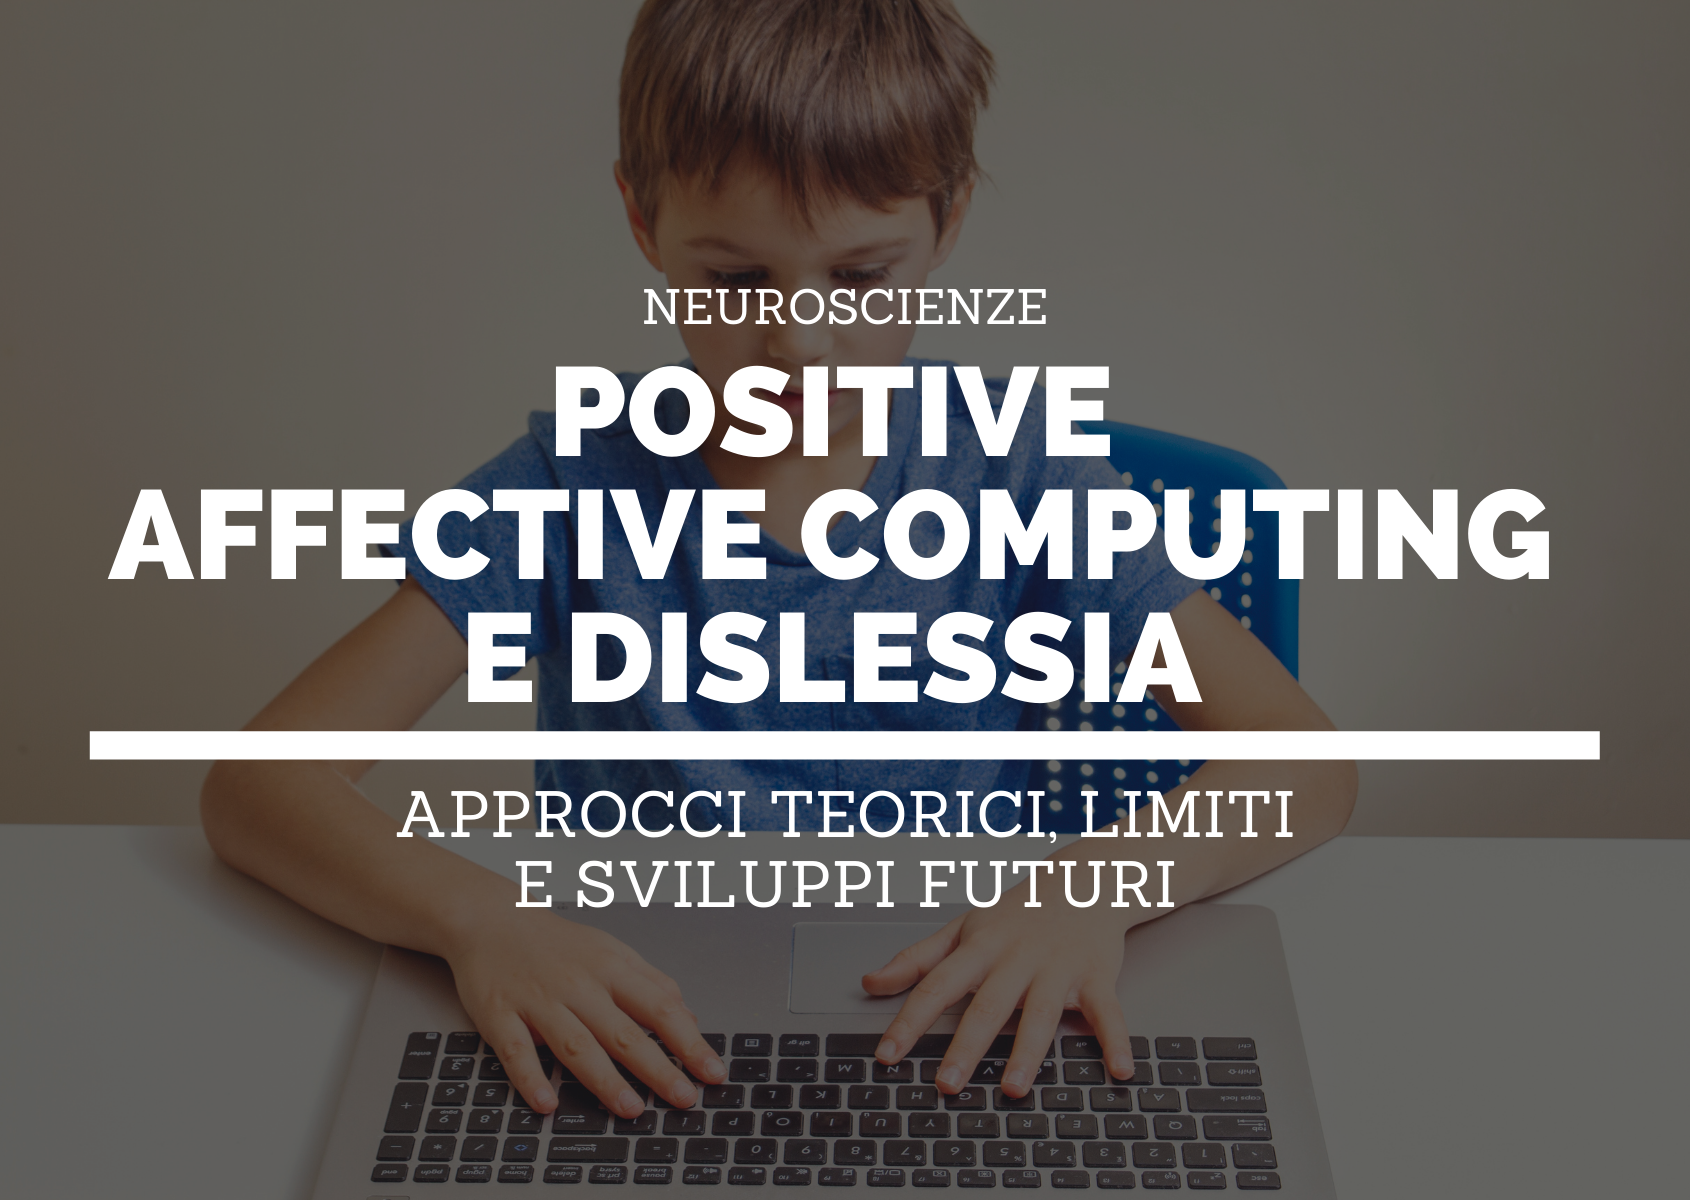 Positive affective computing e dislessia